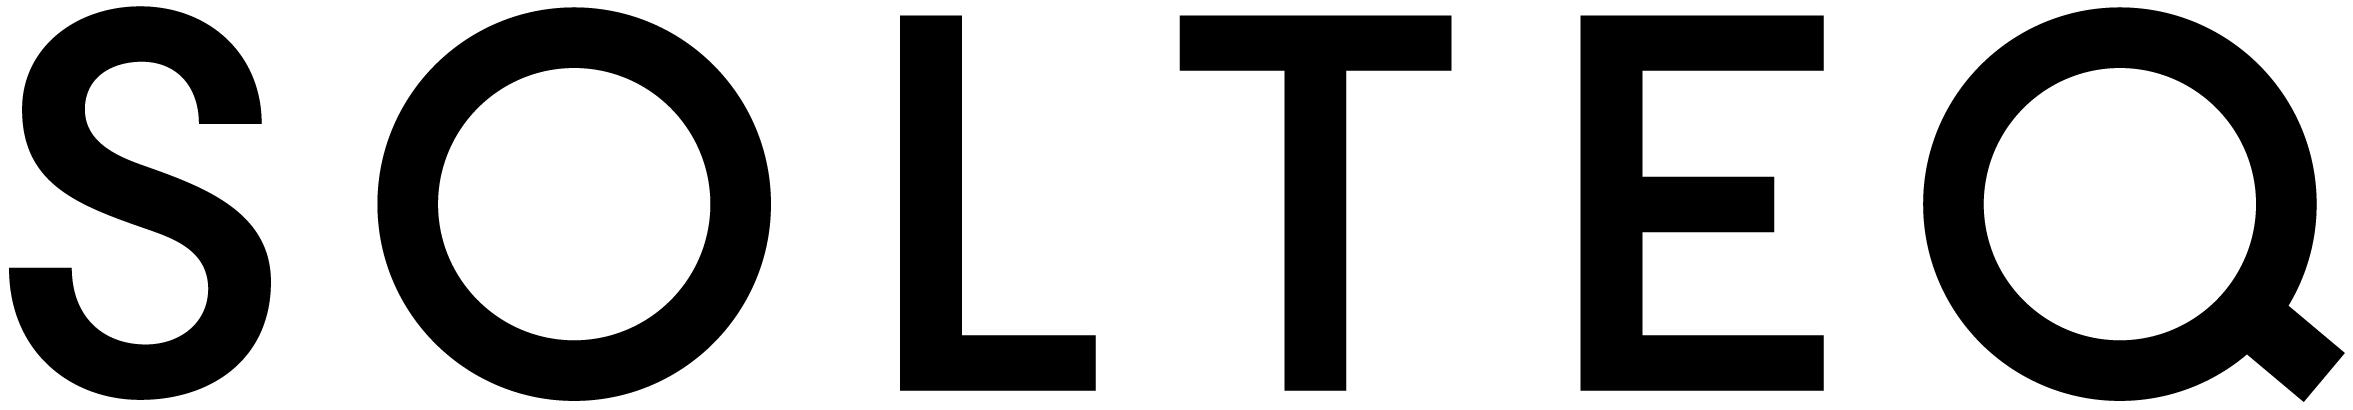 Solteq logo Black